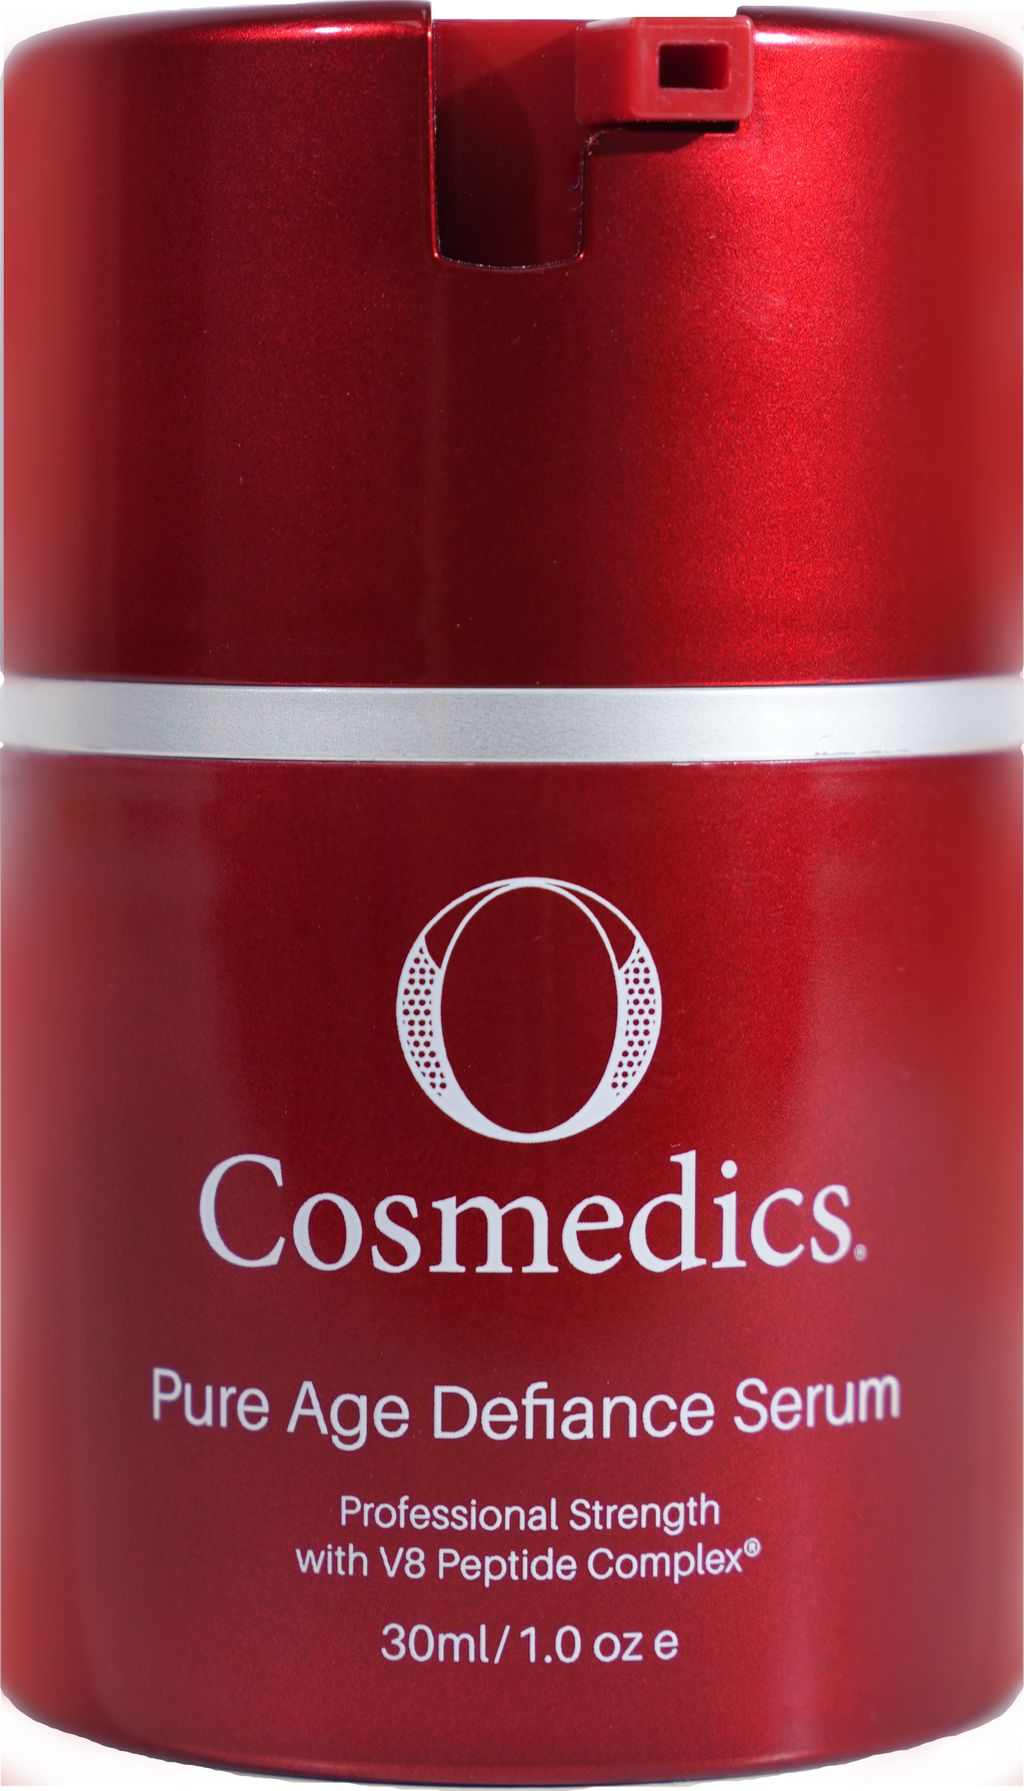 O Cosmedics Pure Age Defiance Serum 30ml